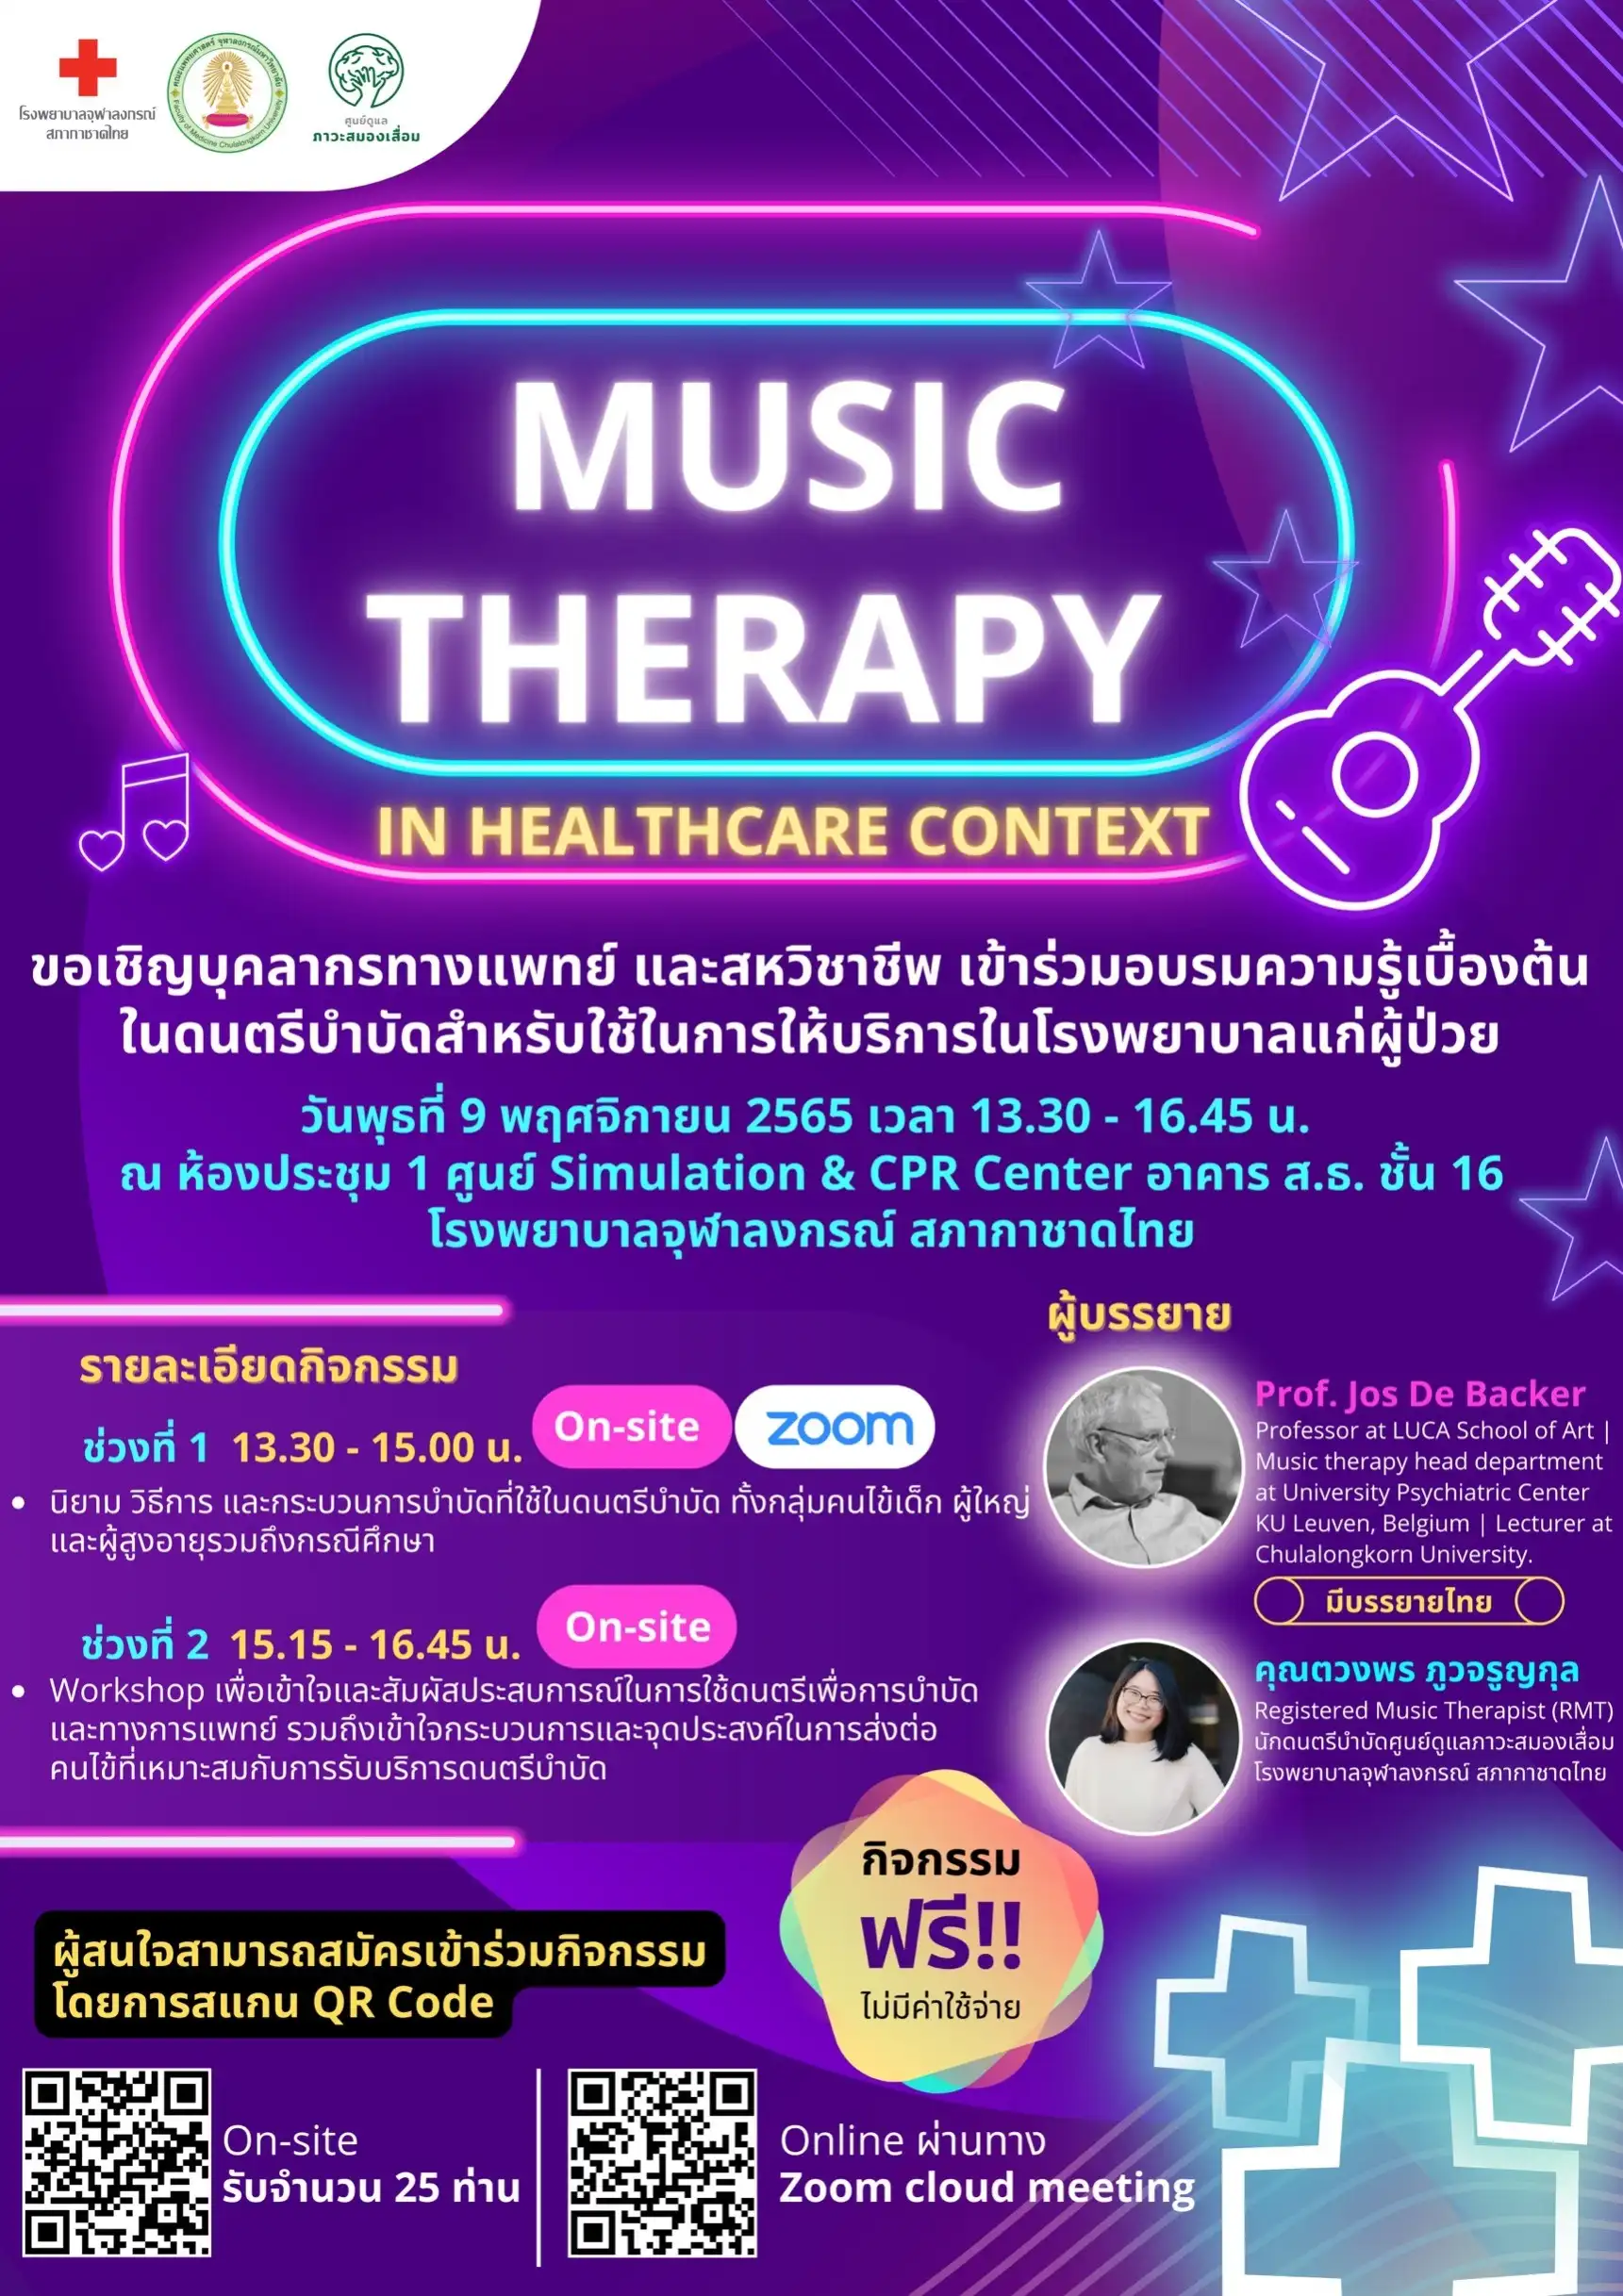 Music Therapy in Healthcare Context - ดนตรีบำบัดสำหรับให้บริการแก่ผู้ป่วย (รพ.จุฬา) HealthServ